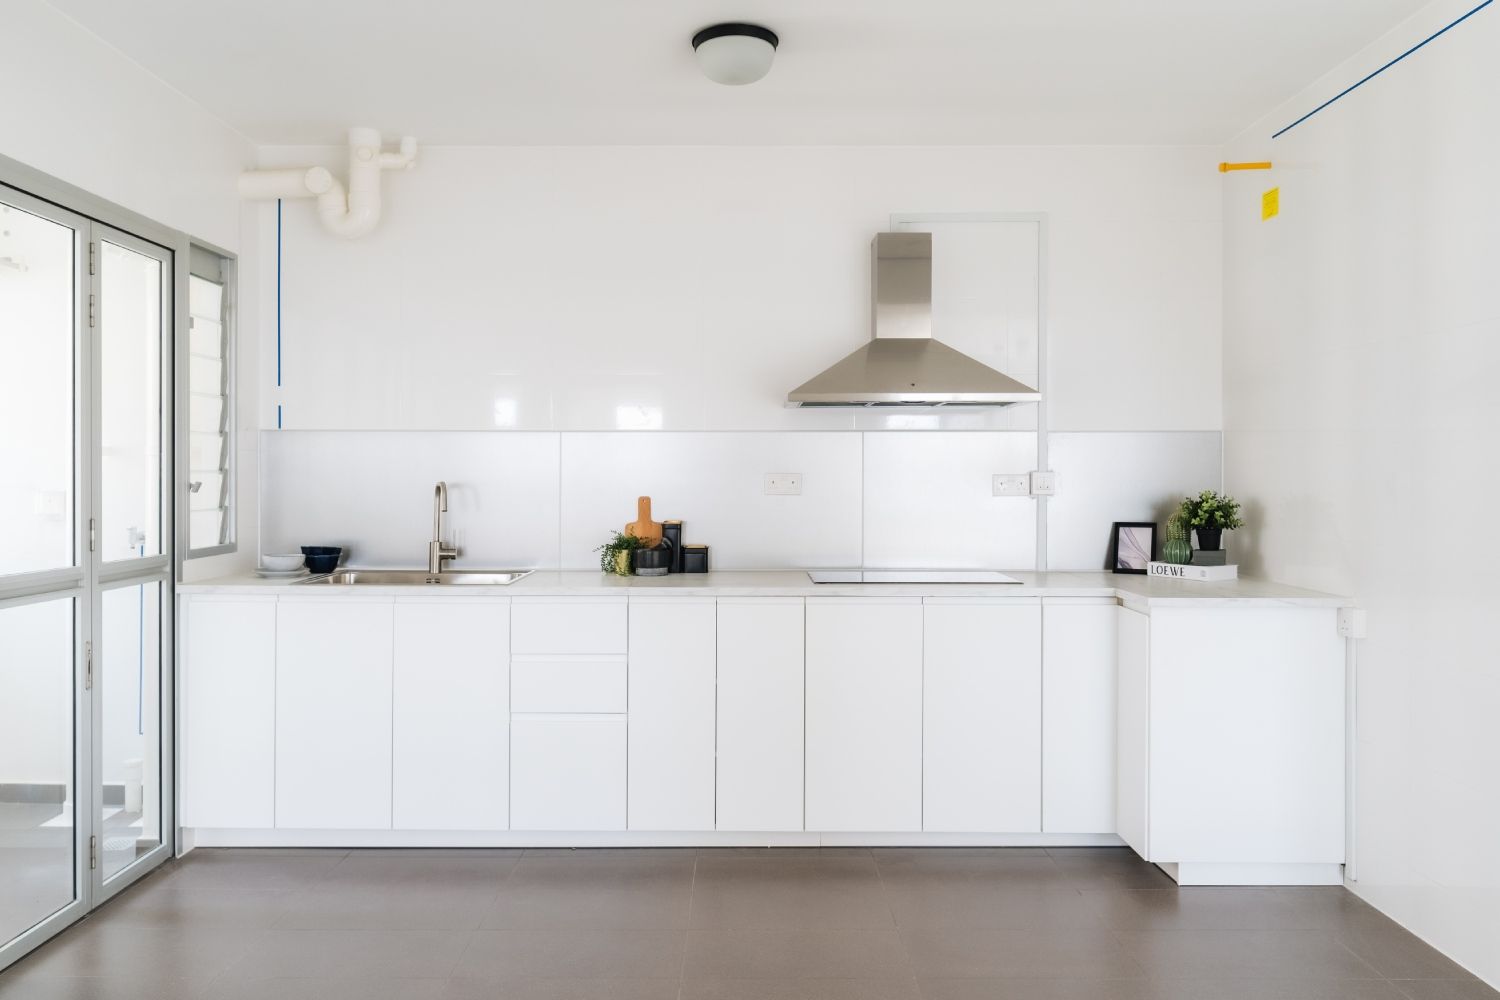 Minimal Kitchen Design With White Closed Storage Cabinets